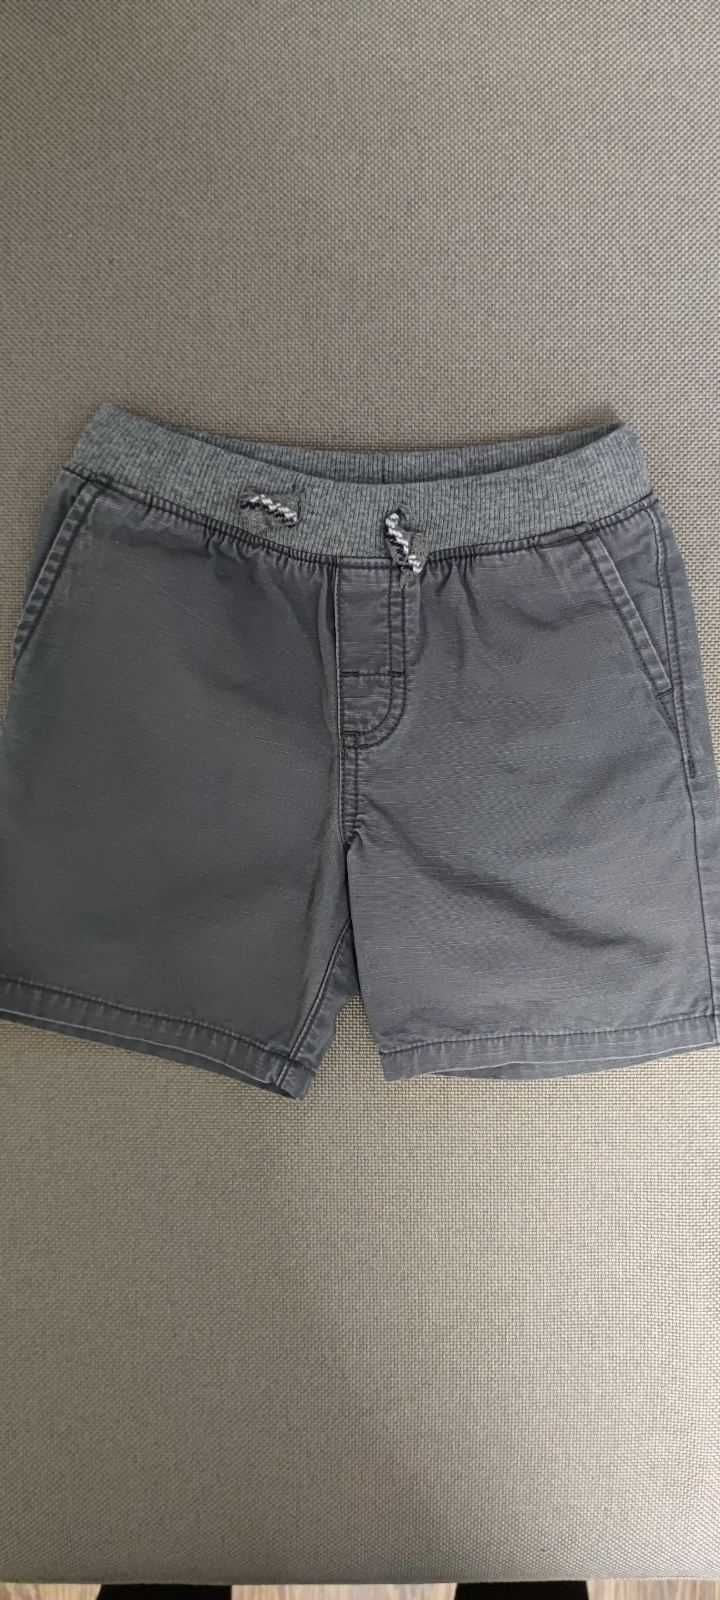 Комплект шортiв Carter's 24 мiсяцi (2-3 роки) для хлопчика